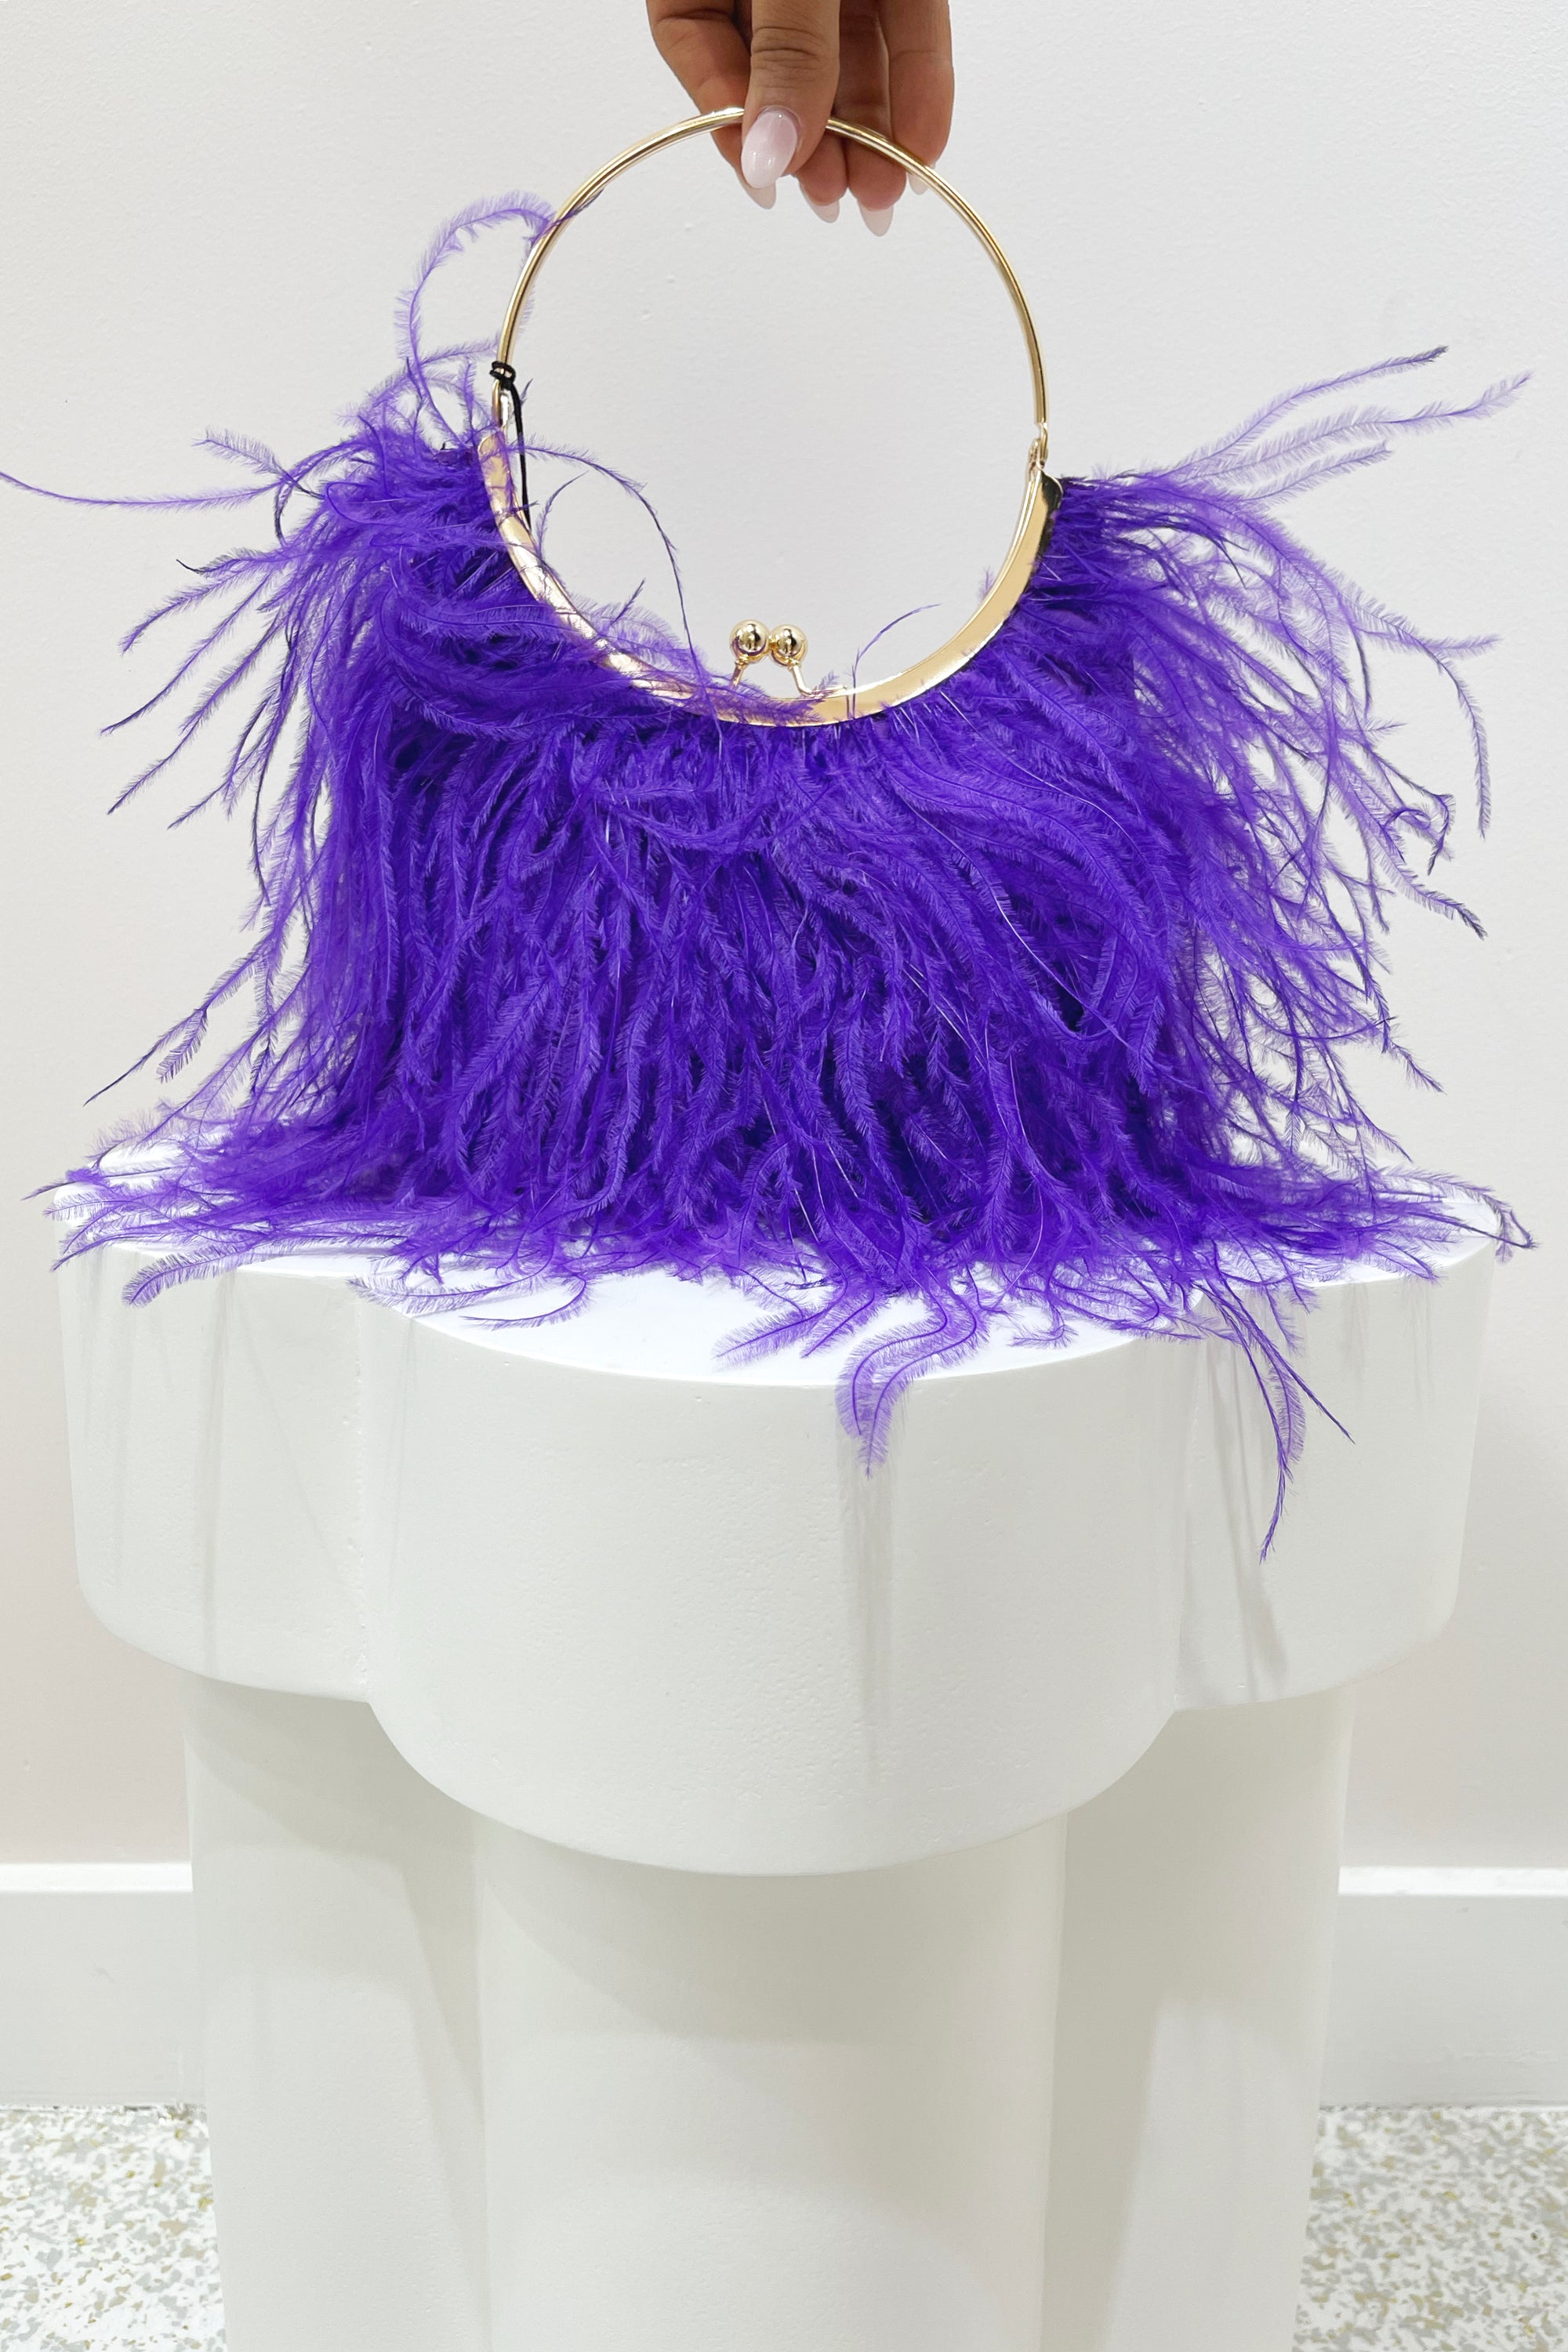 Olga Berg Penny Feathered Frame Bag | Purple